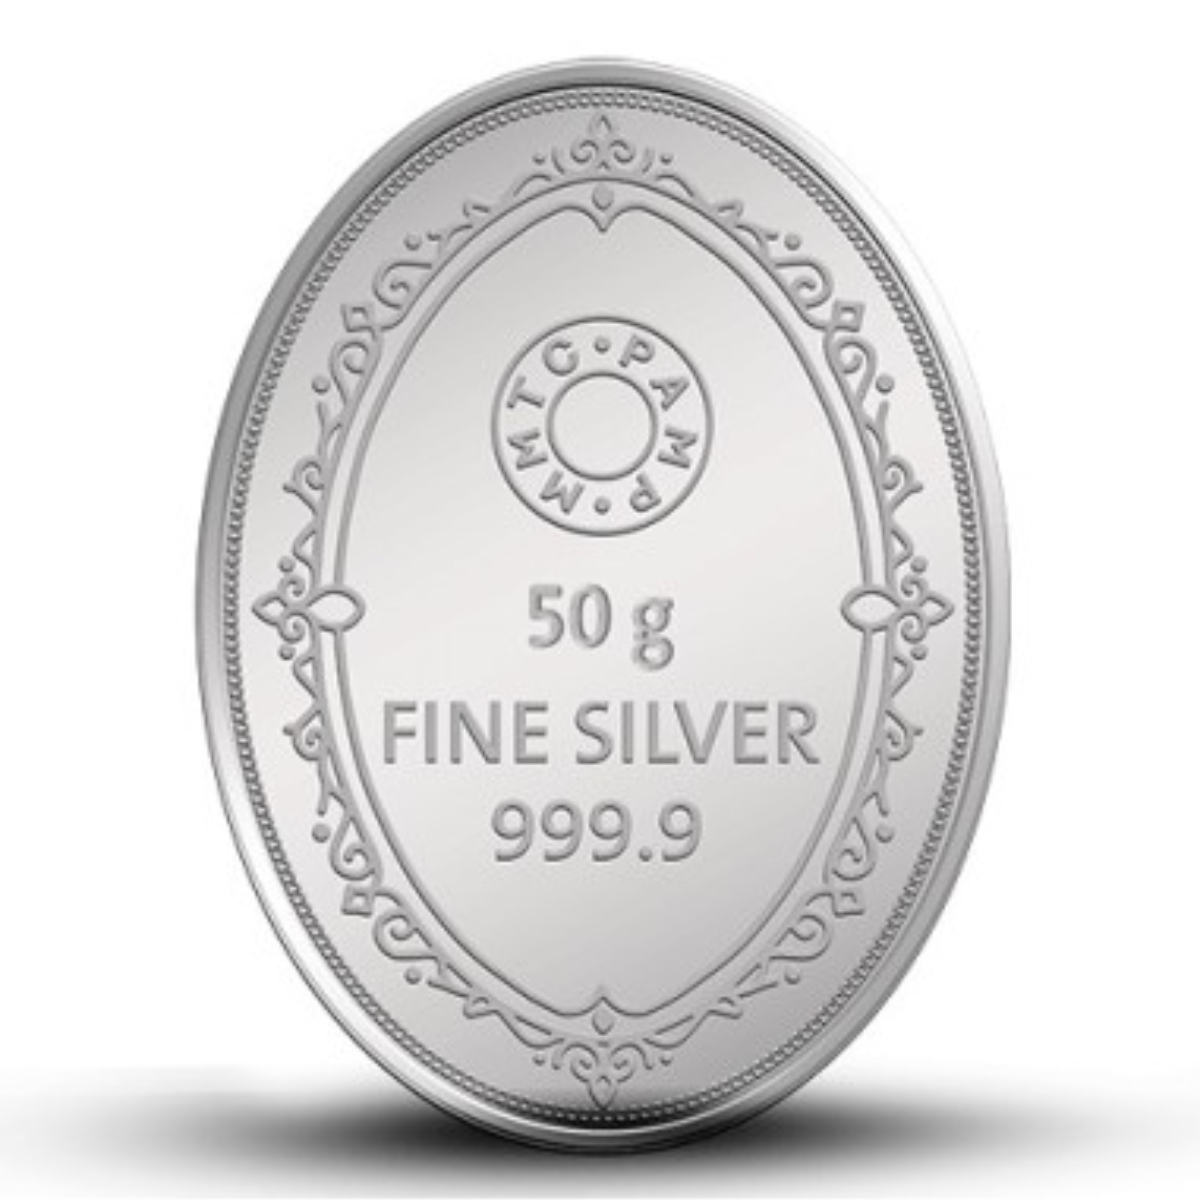 50 gm Rani MMTC Silver Coin